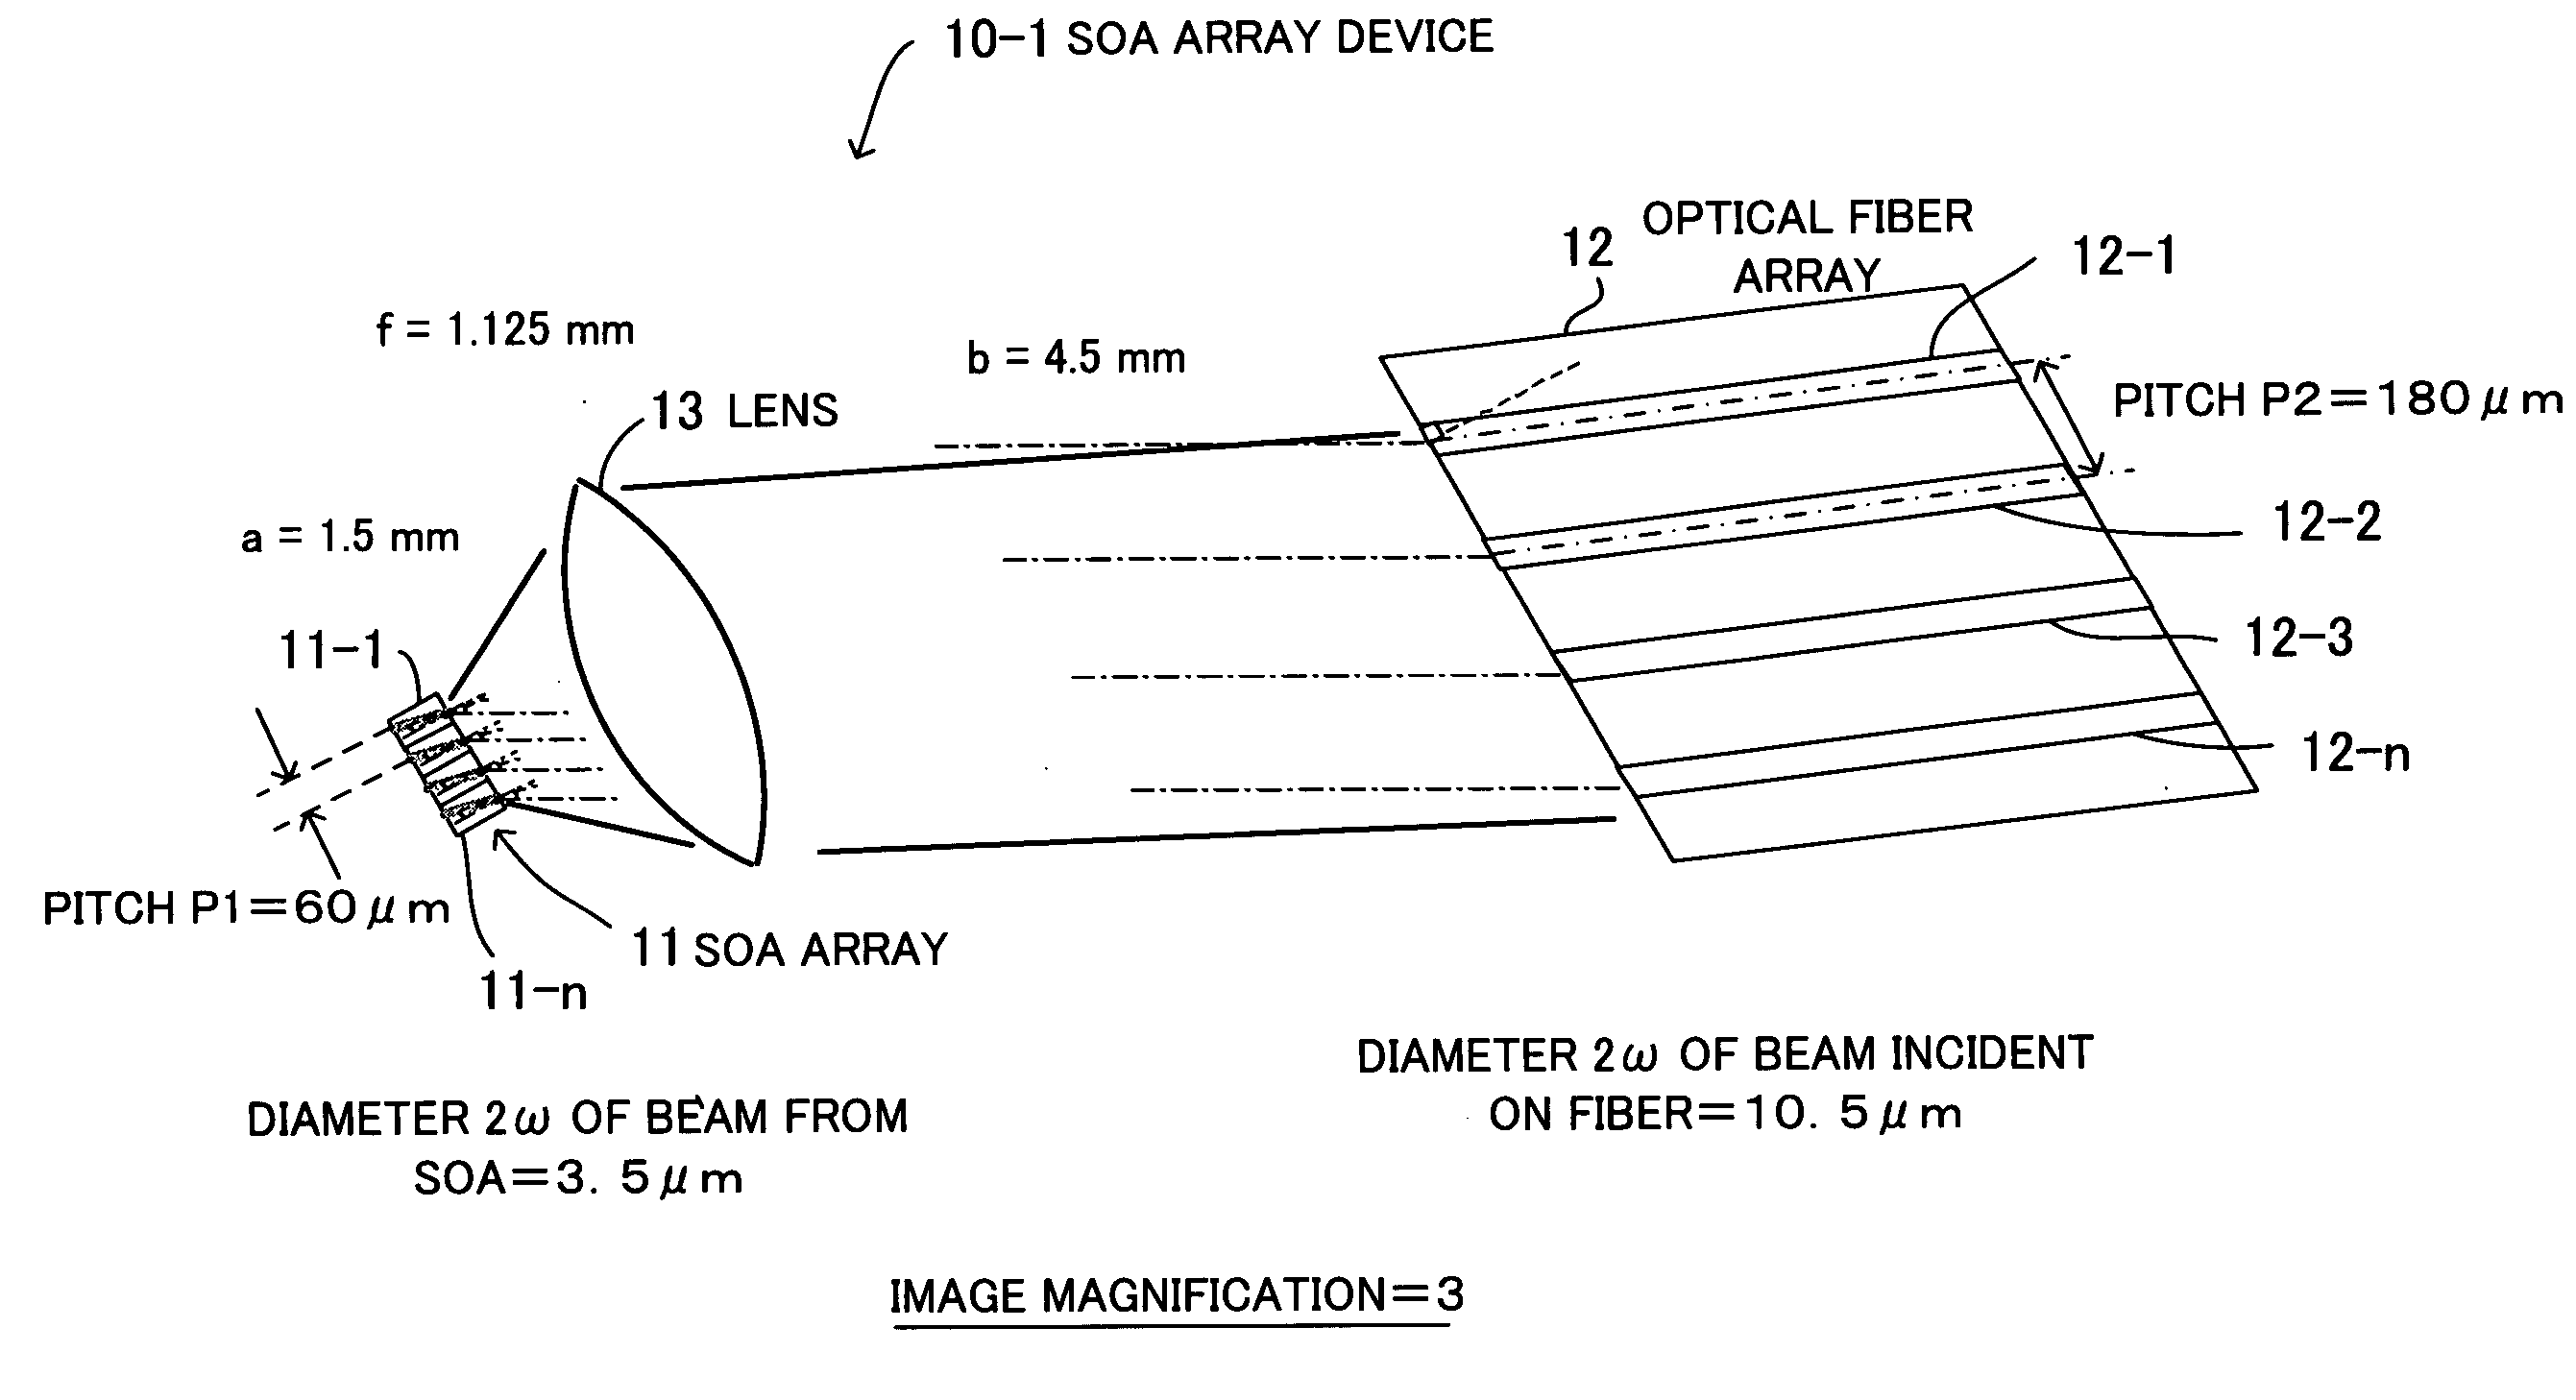 Optical gate array device